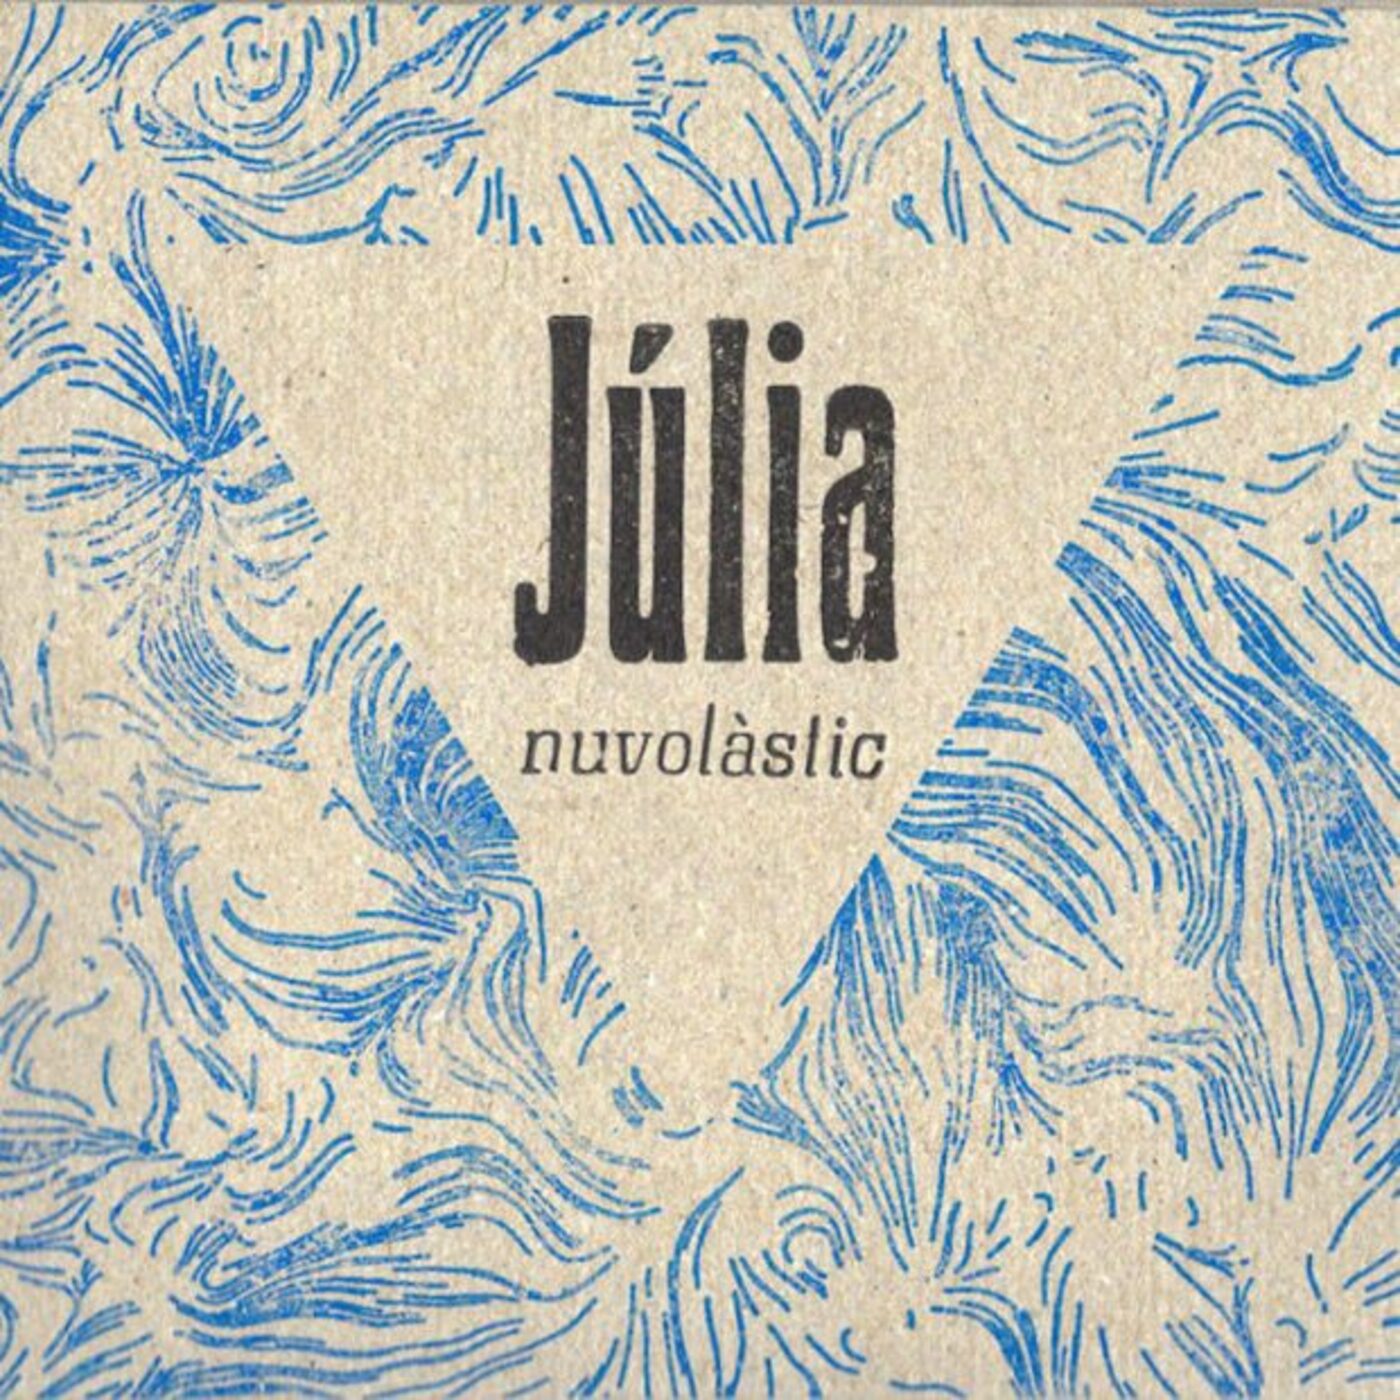 Júlia - Nuvolàstic  | musica en valencià